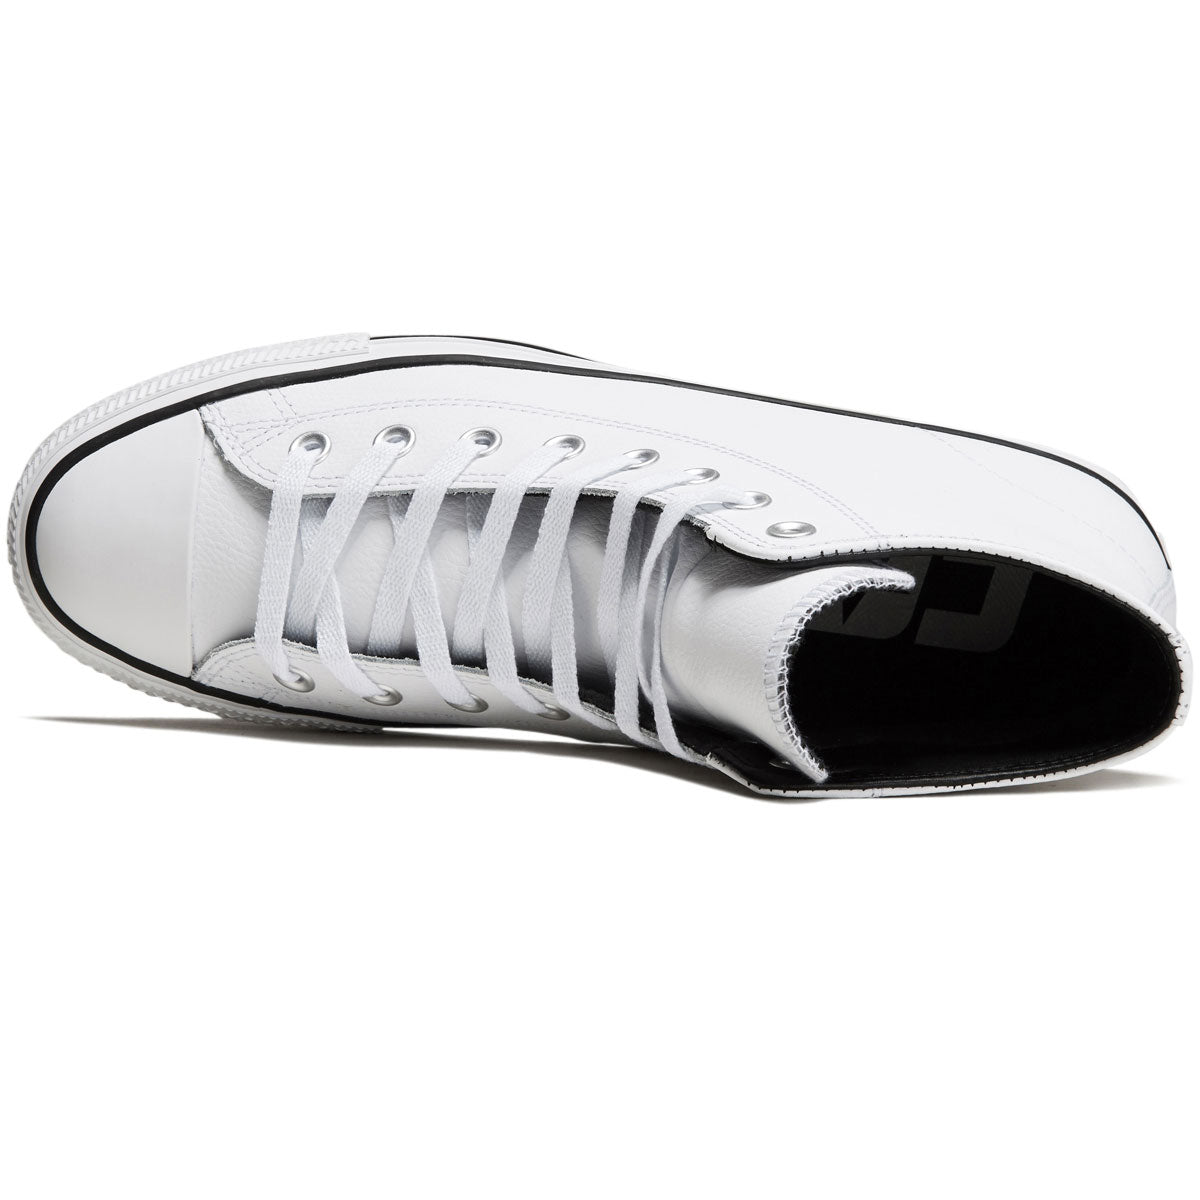 Converse Ctas Pro Hi Shoes - White/White/Black image 3